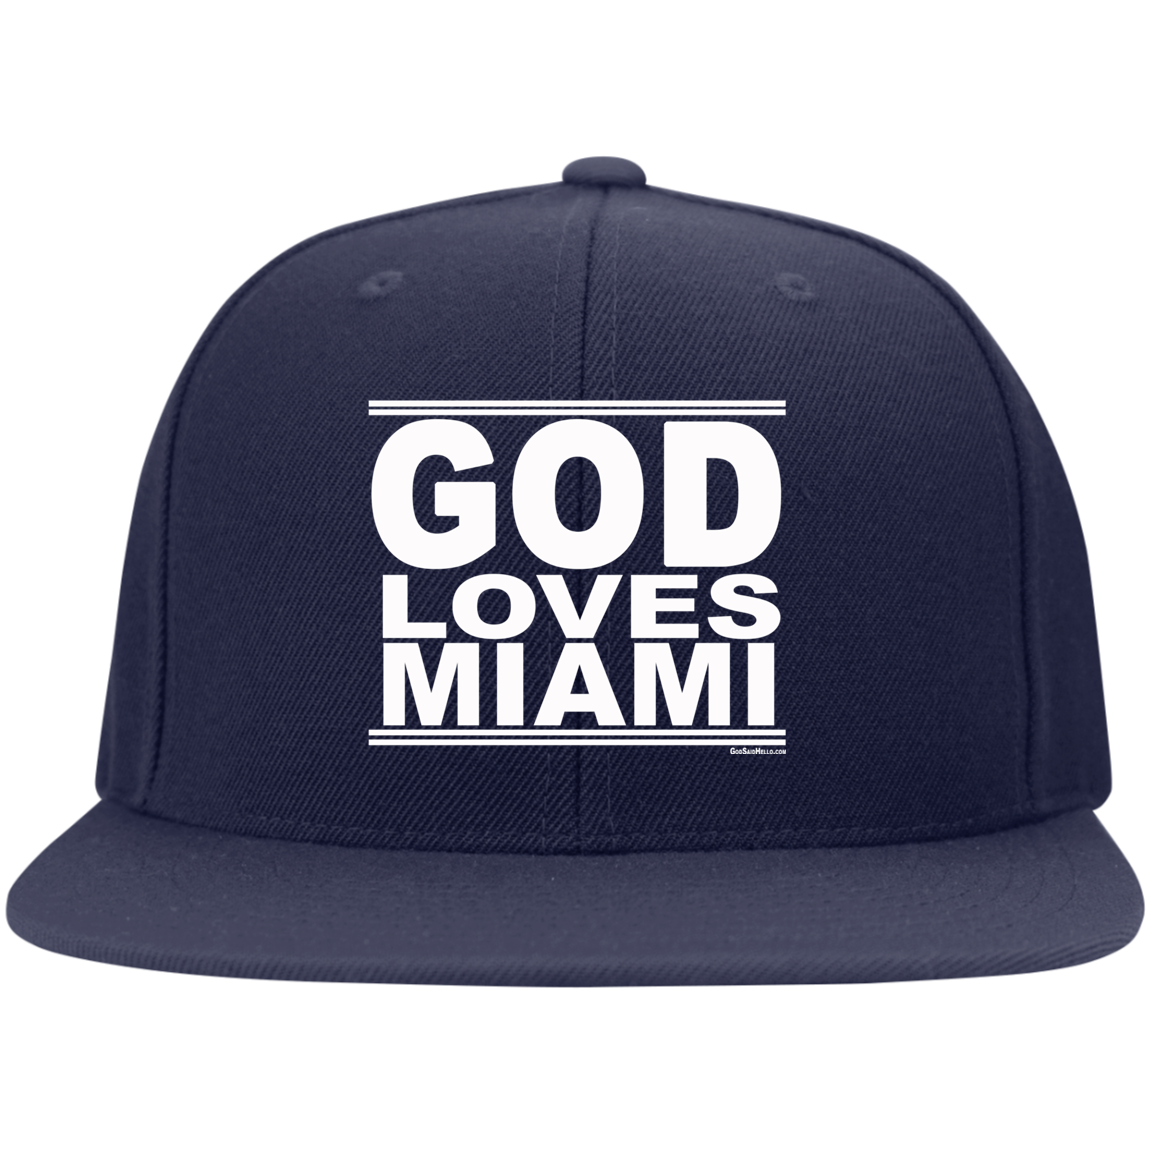 #GodLovesMiami - Snapback Hat